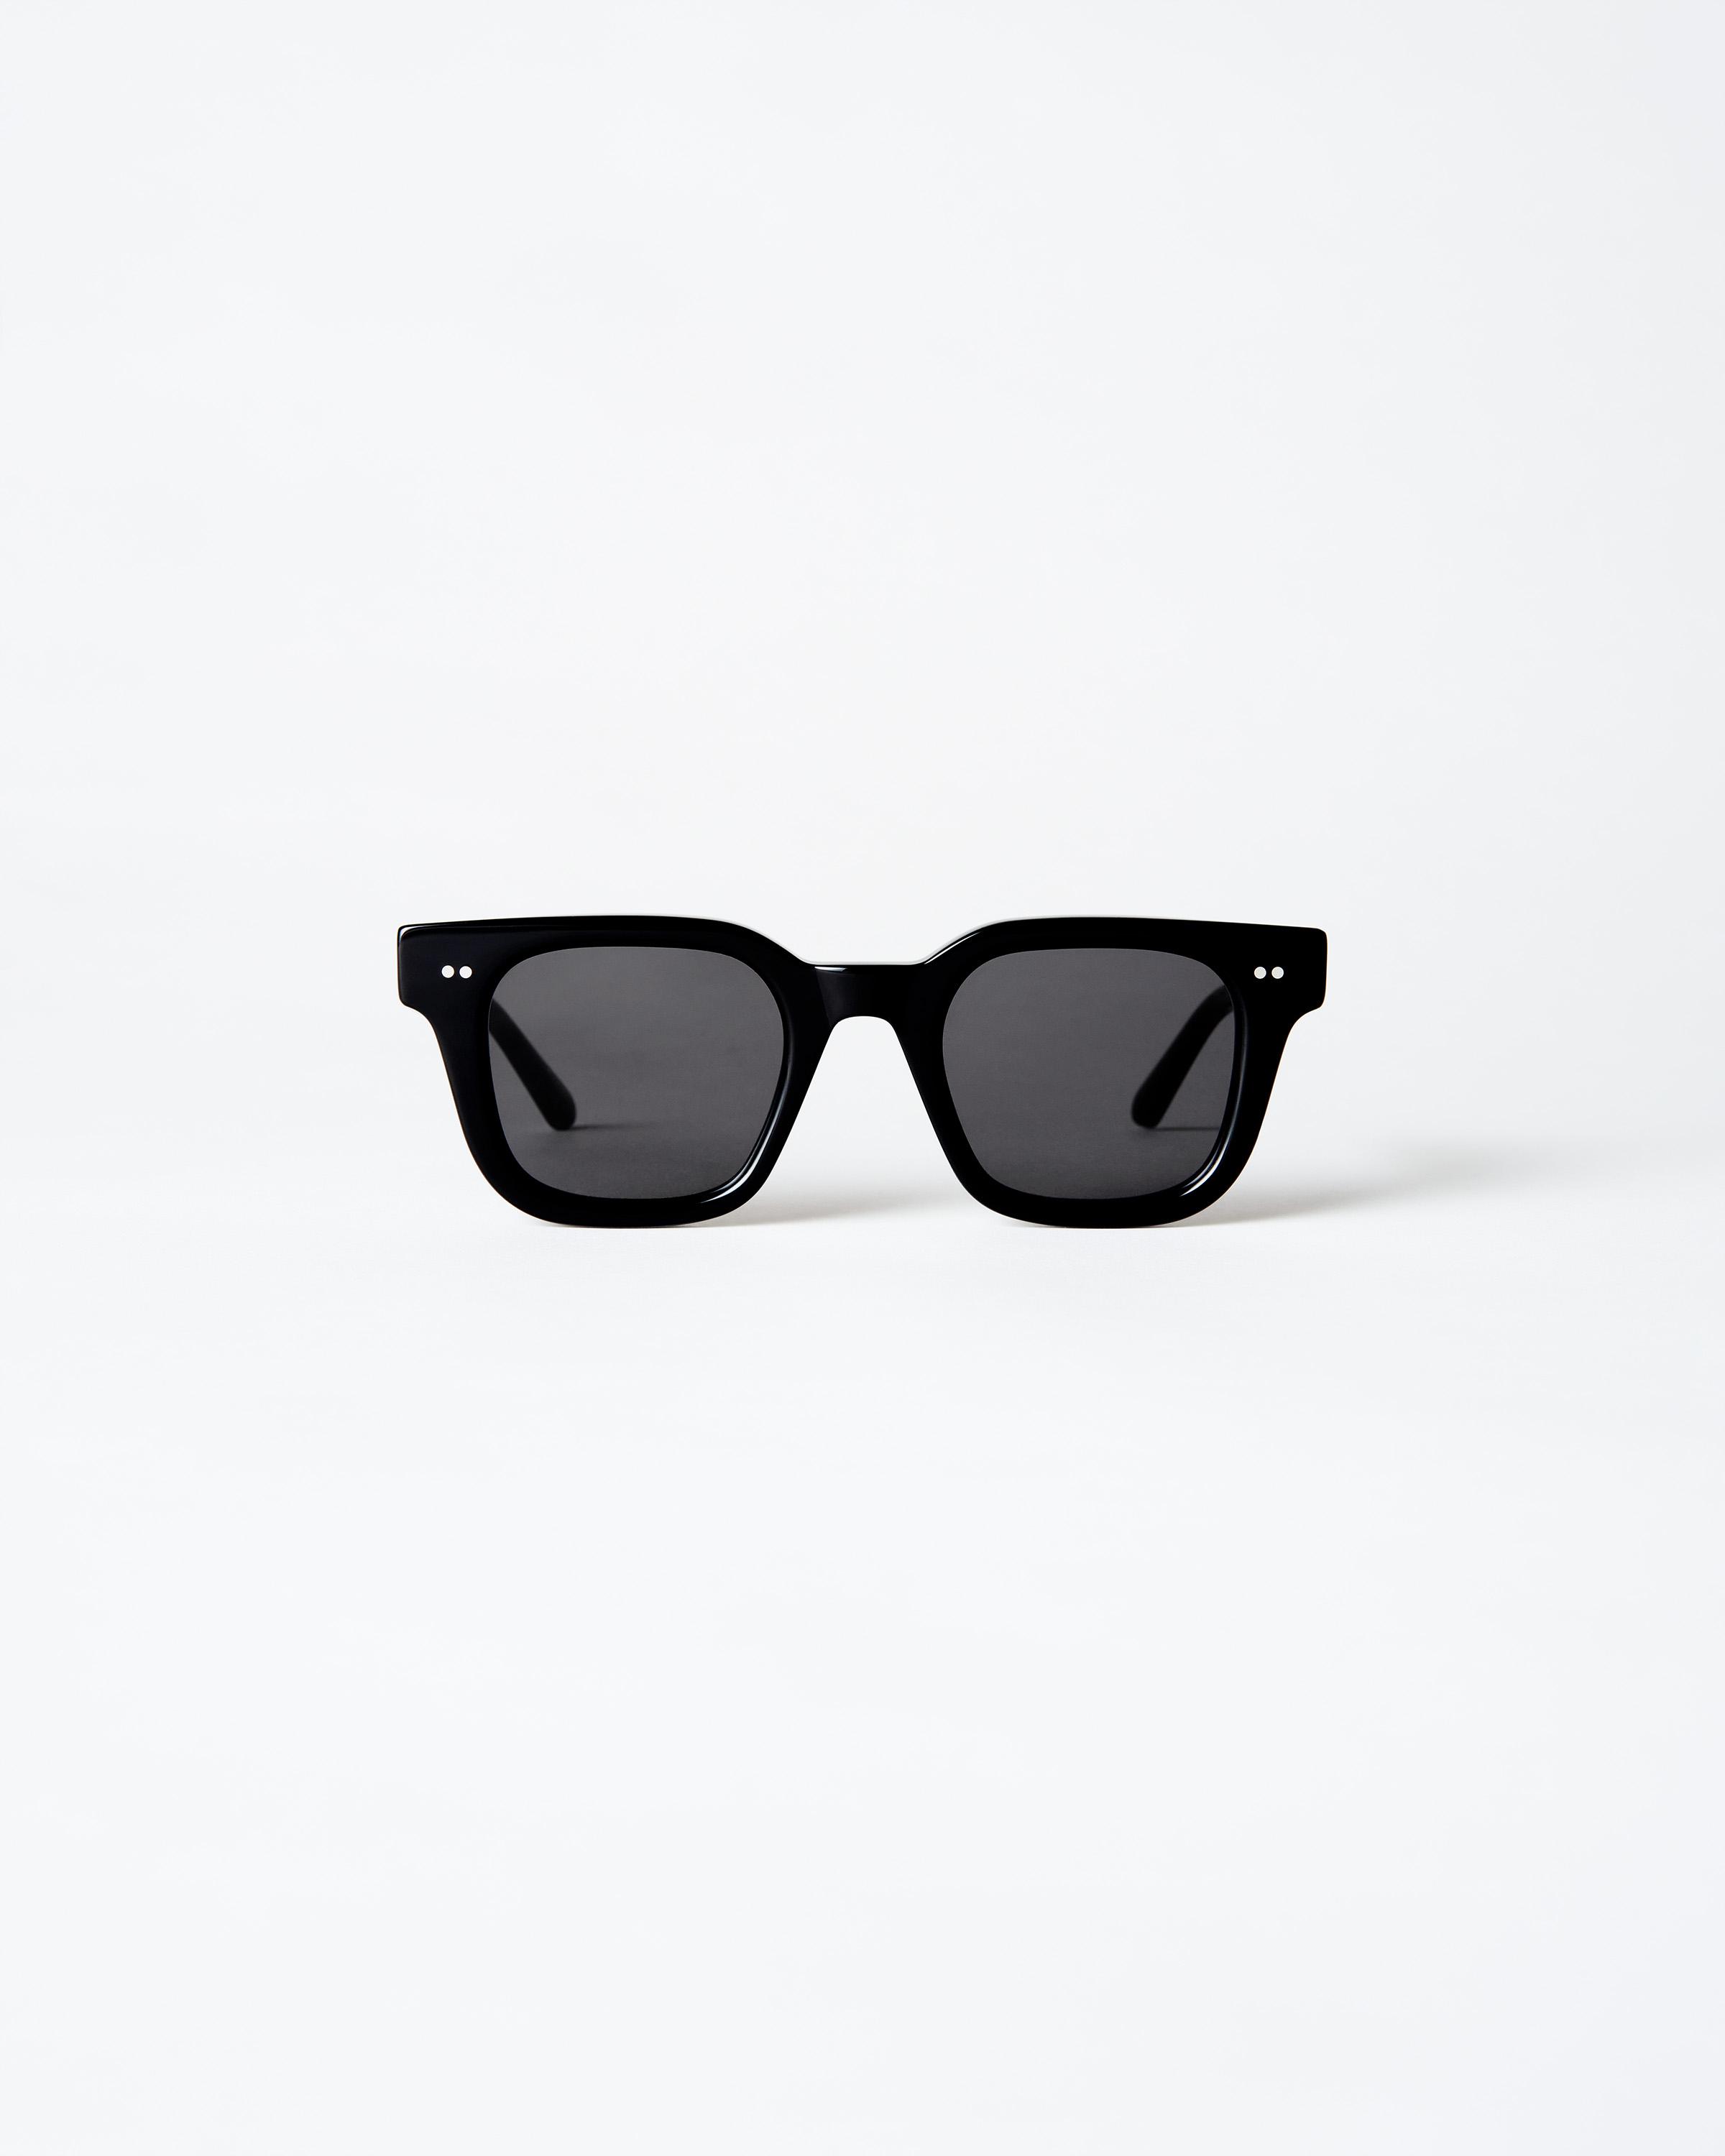 04 Black - Sunglasses